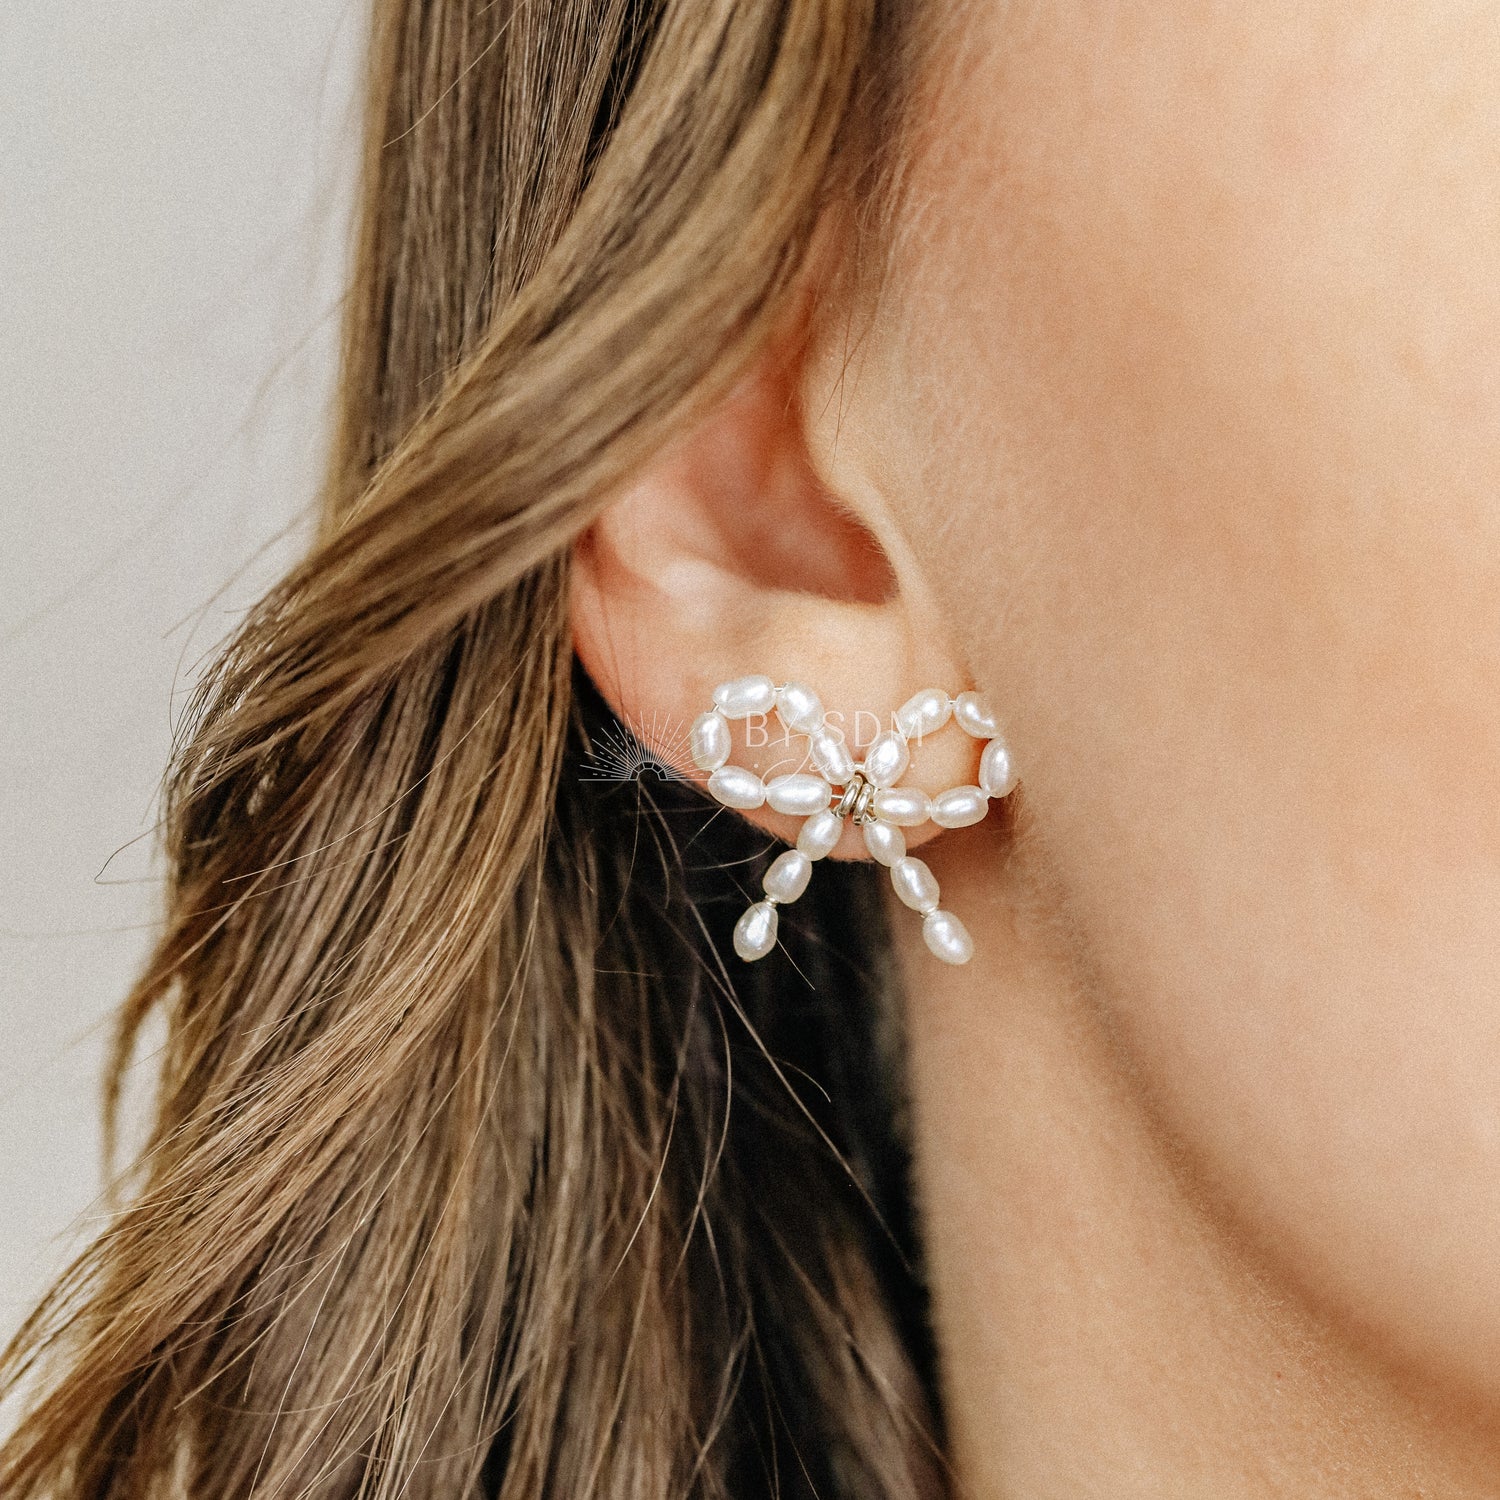 Sterling Silver Pearl Bow Earrings, Freshwater Pearl Earrings, Pearl Jewelry, Bridesmaids Earrings, Gift for Her • BYSDMJEWELS